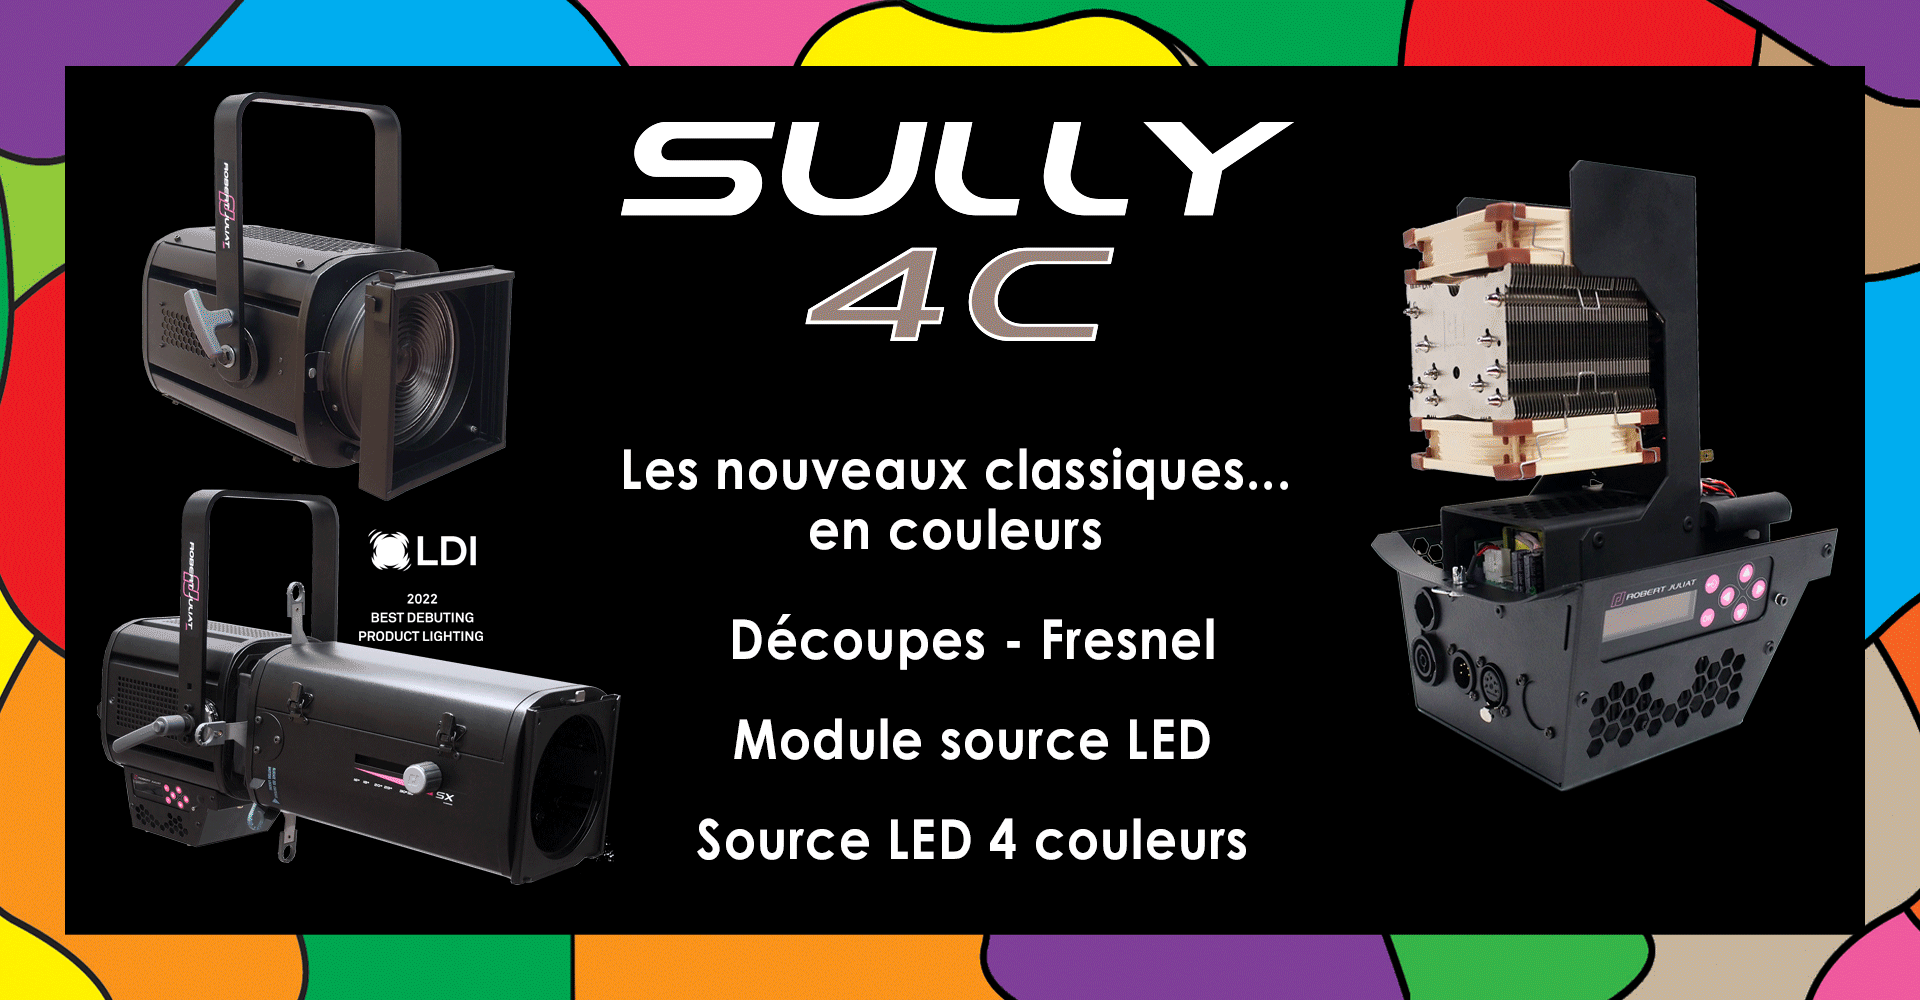 #Sully4C